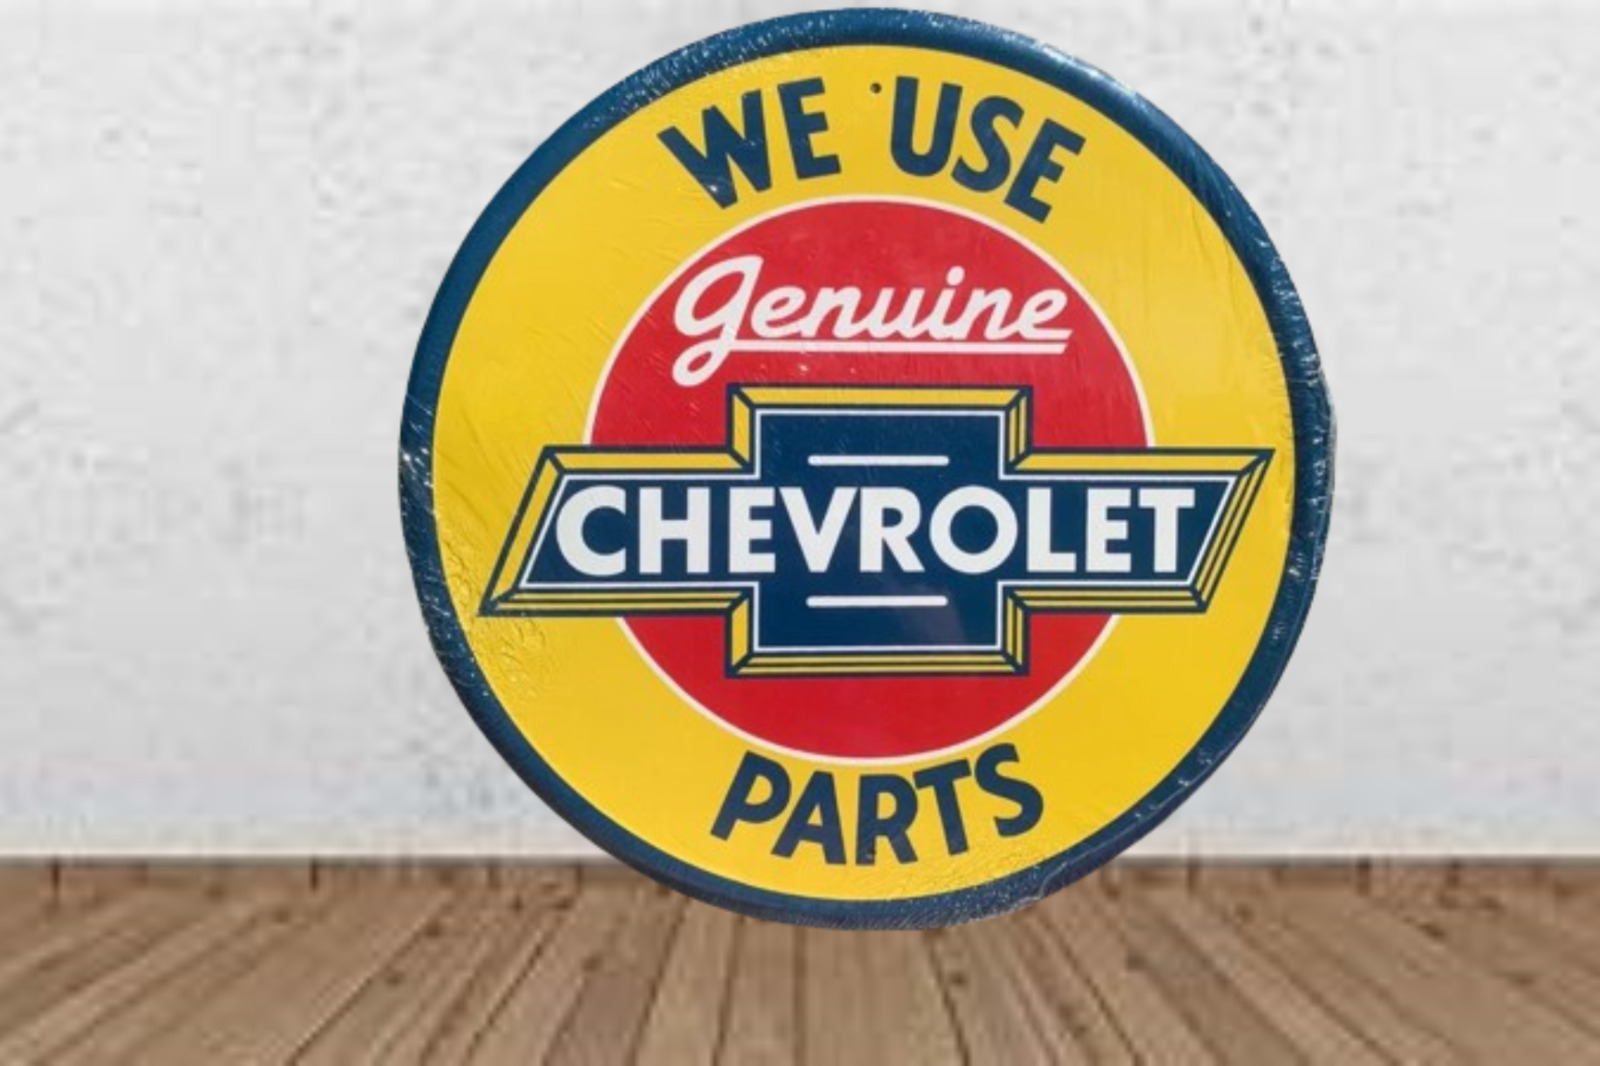 Chevrolet PArts  Porcelain Enamel Heavy Metal Sign 42 Inches Double  Side